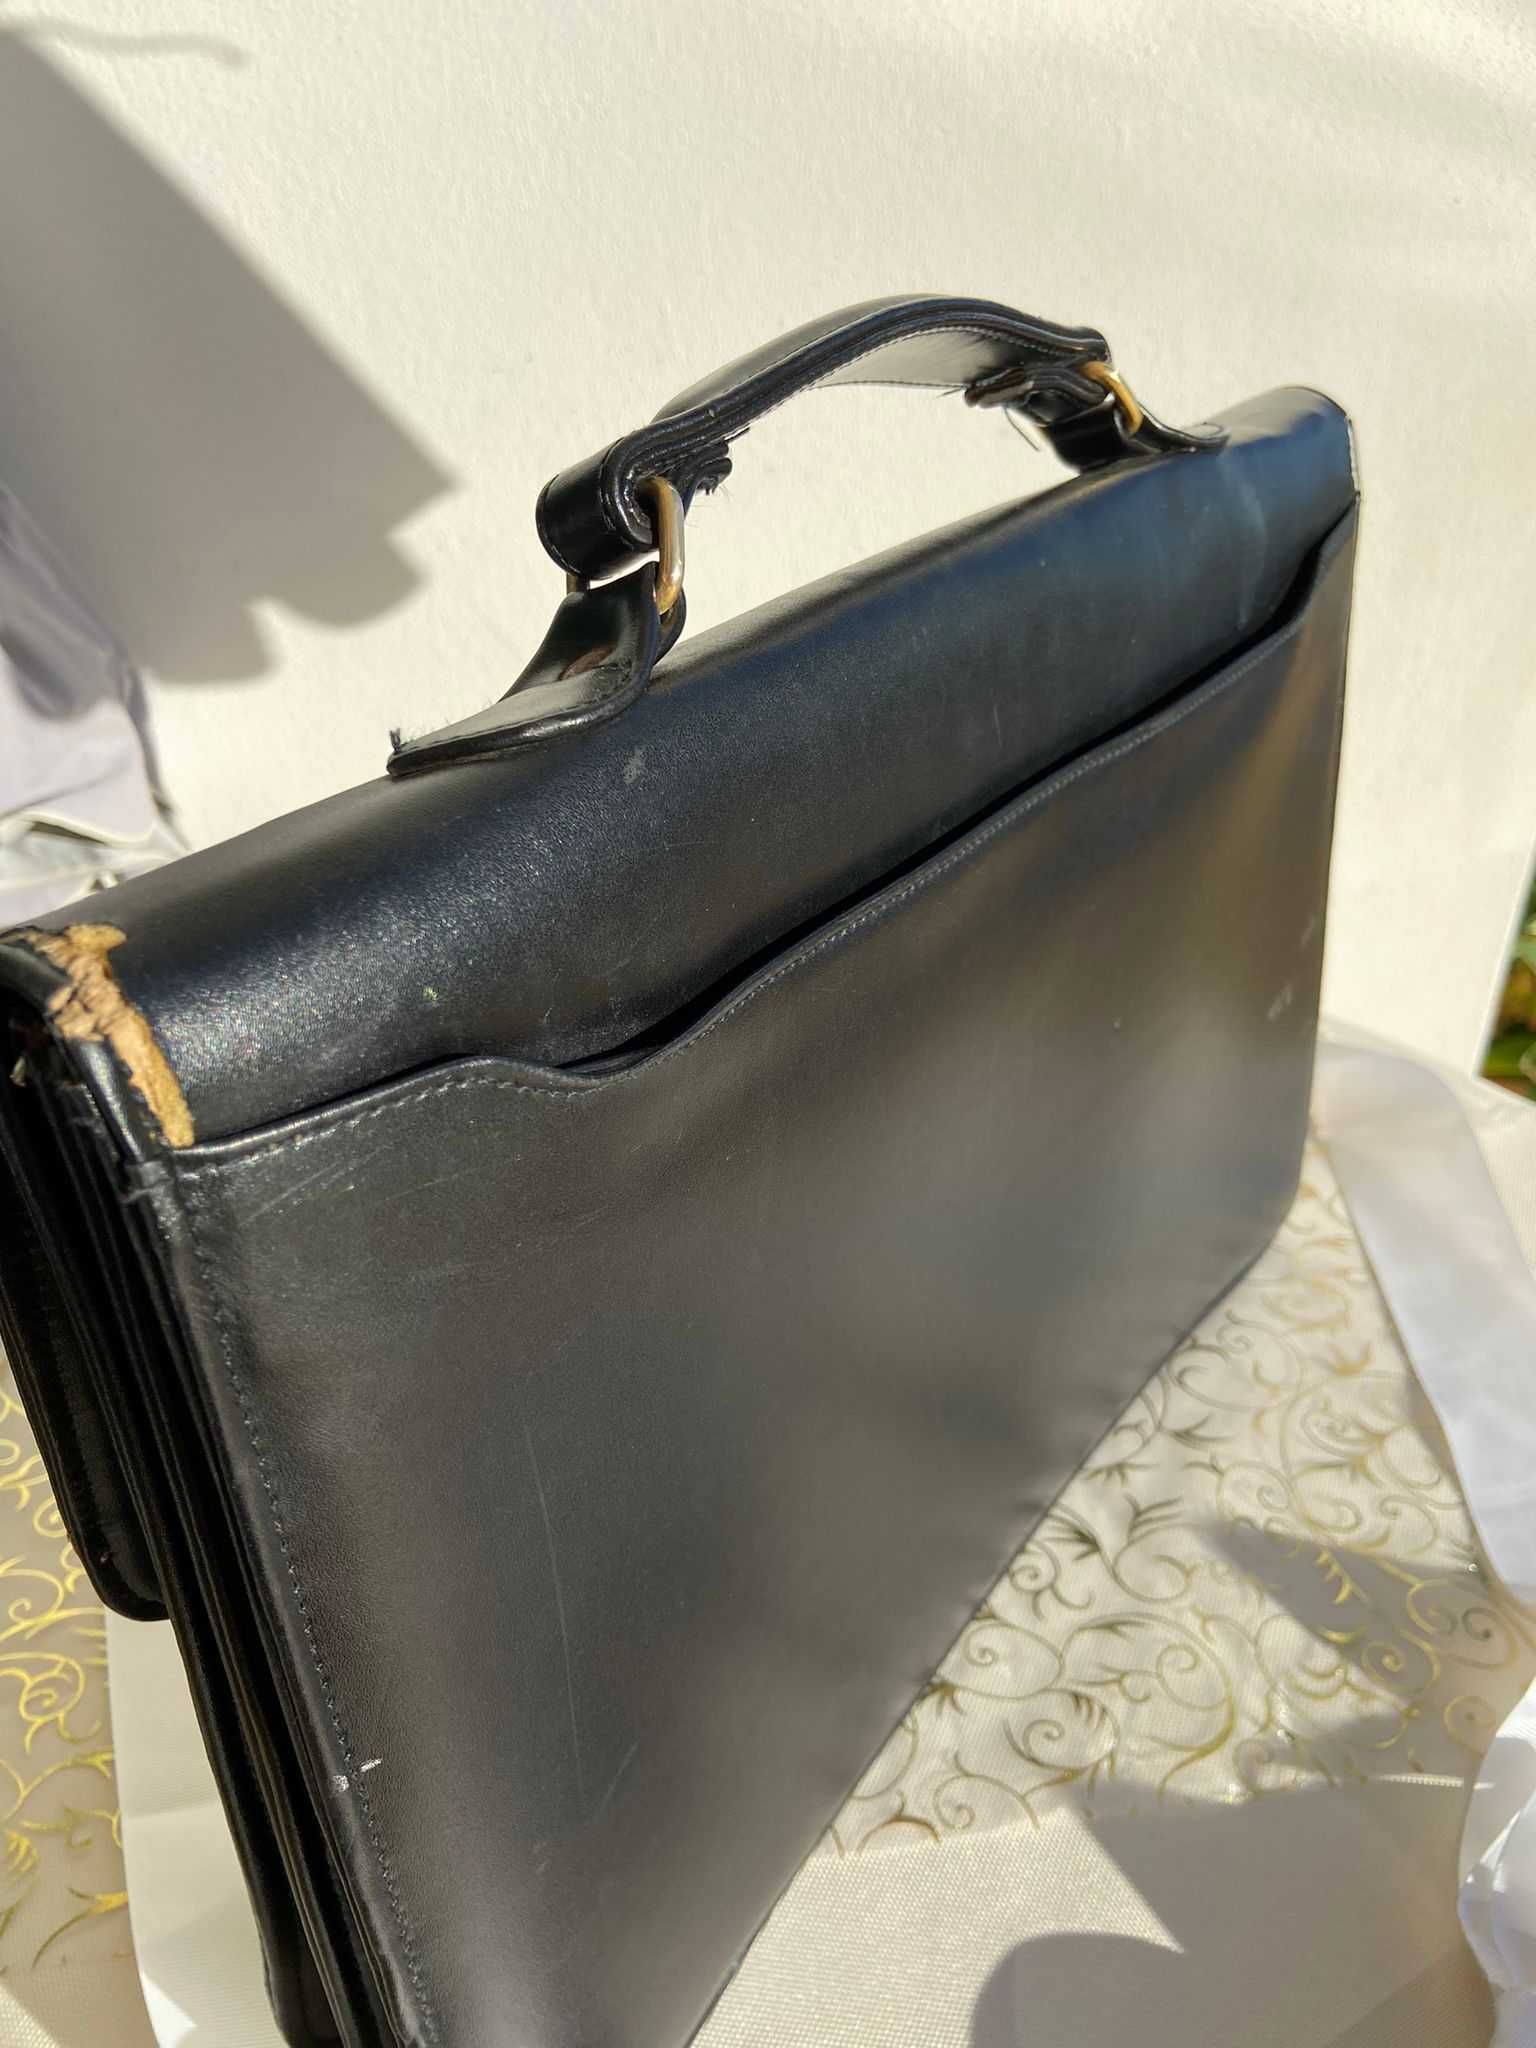 YSL vintage 70's laptop bag  / mala Yves Saint Laurent dos anos 70